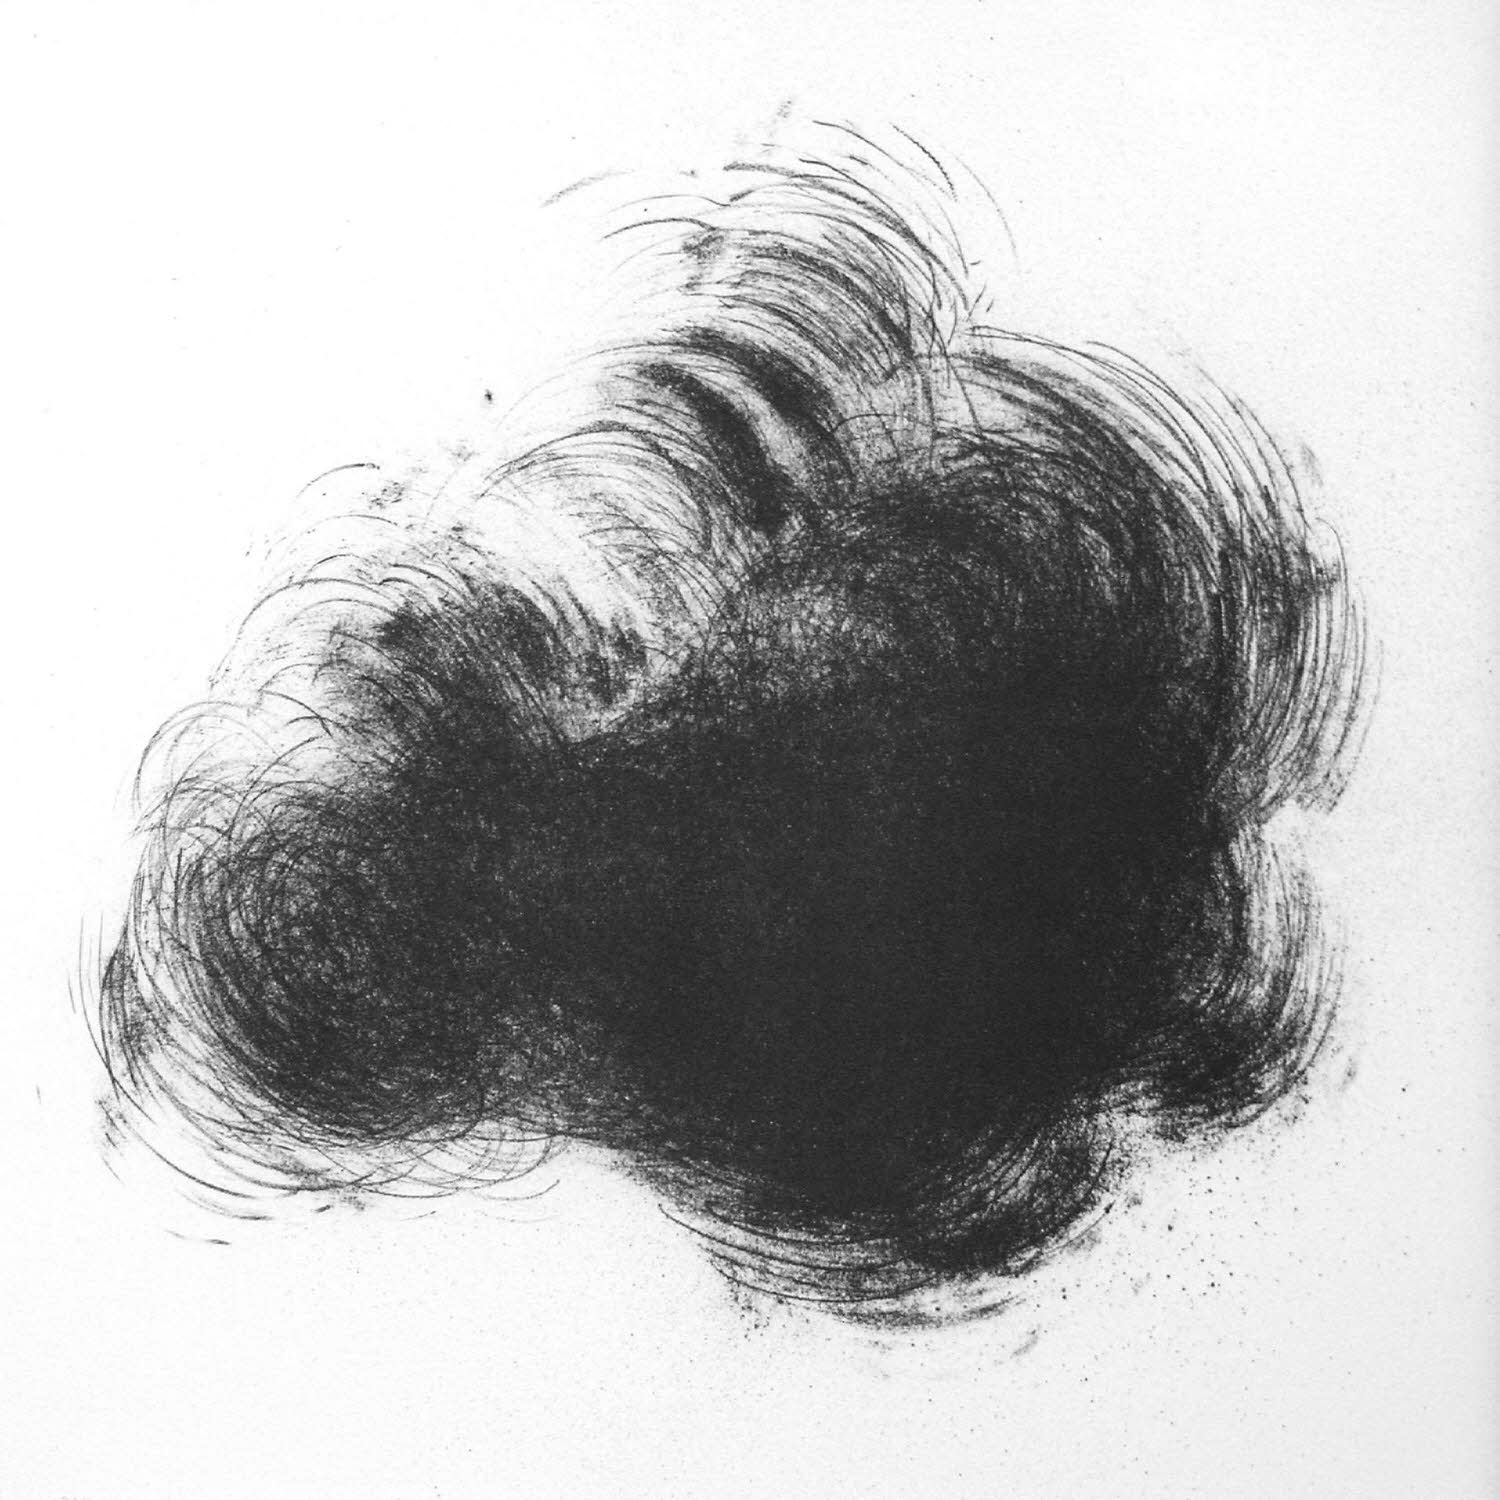 Black Cloud on White, 2005, litho print, 20x20 inches